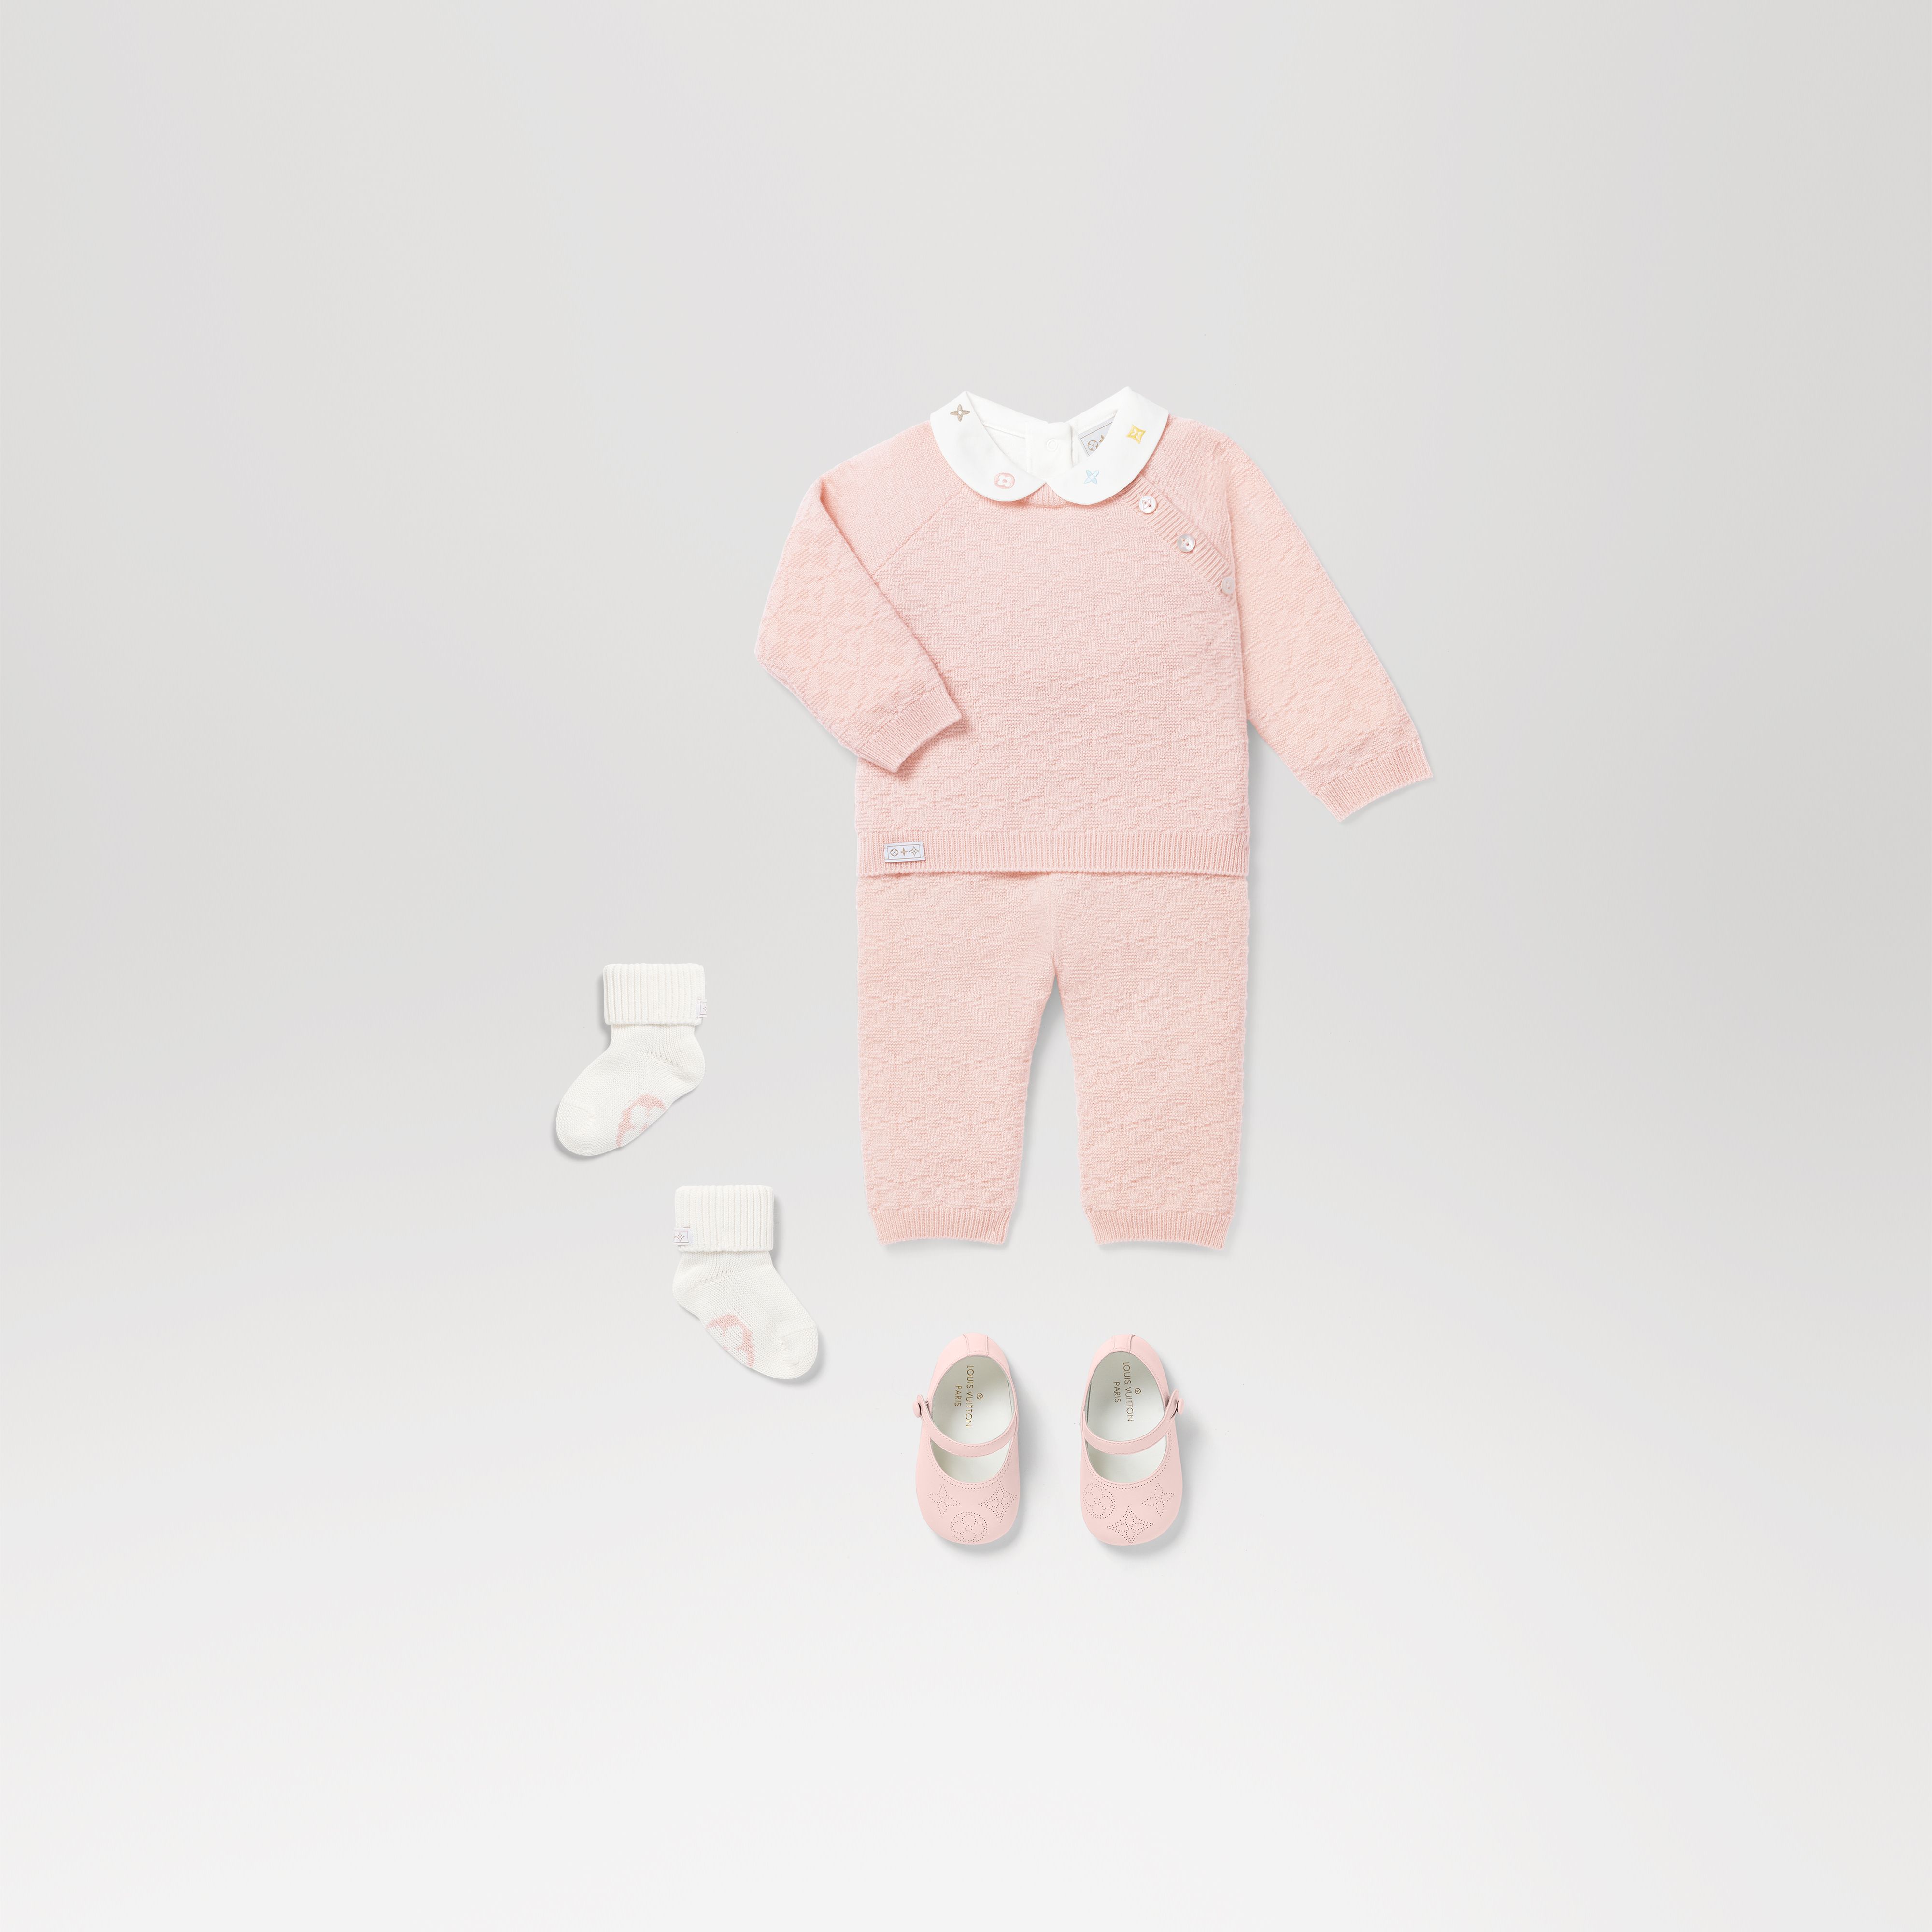 Shop Louis Vuitton Baby Items